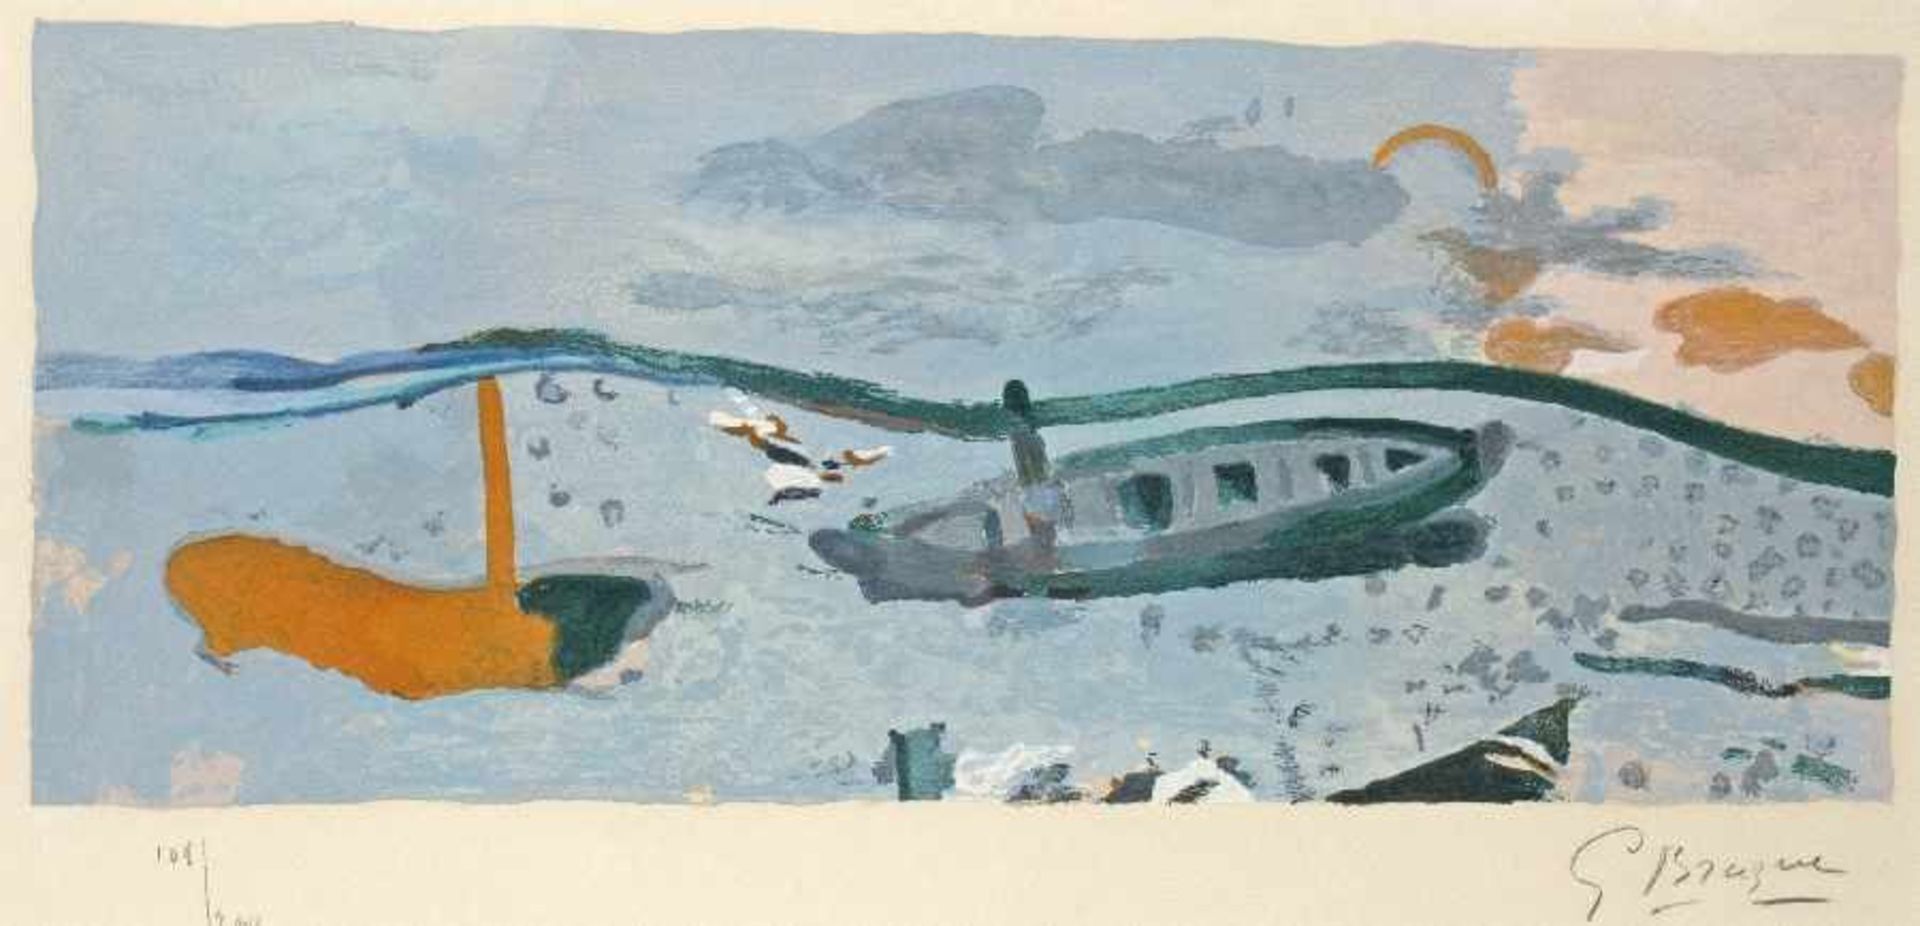 Georges Braque1881 Argenteuil - 1963 ParisBoote am StrandFarbaquatinta auf Papier; H 240 mm, B 580